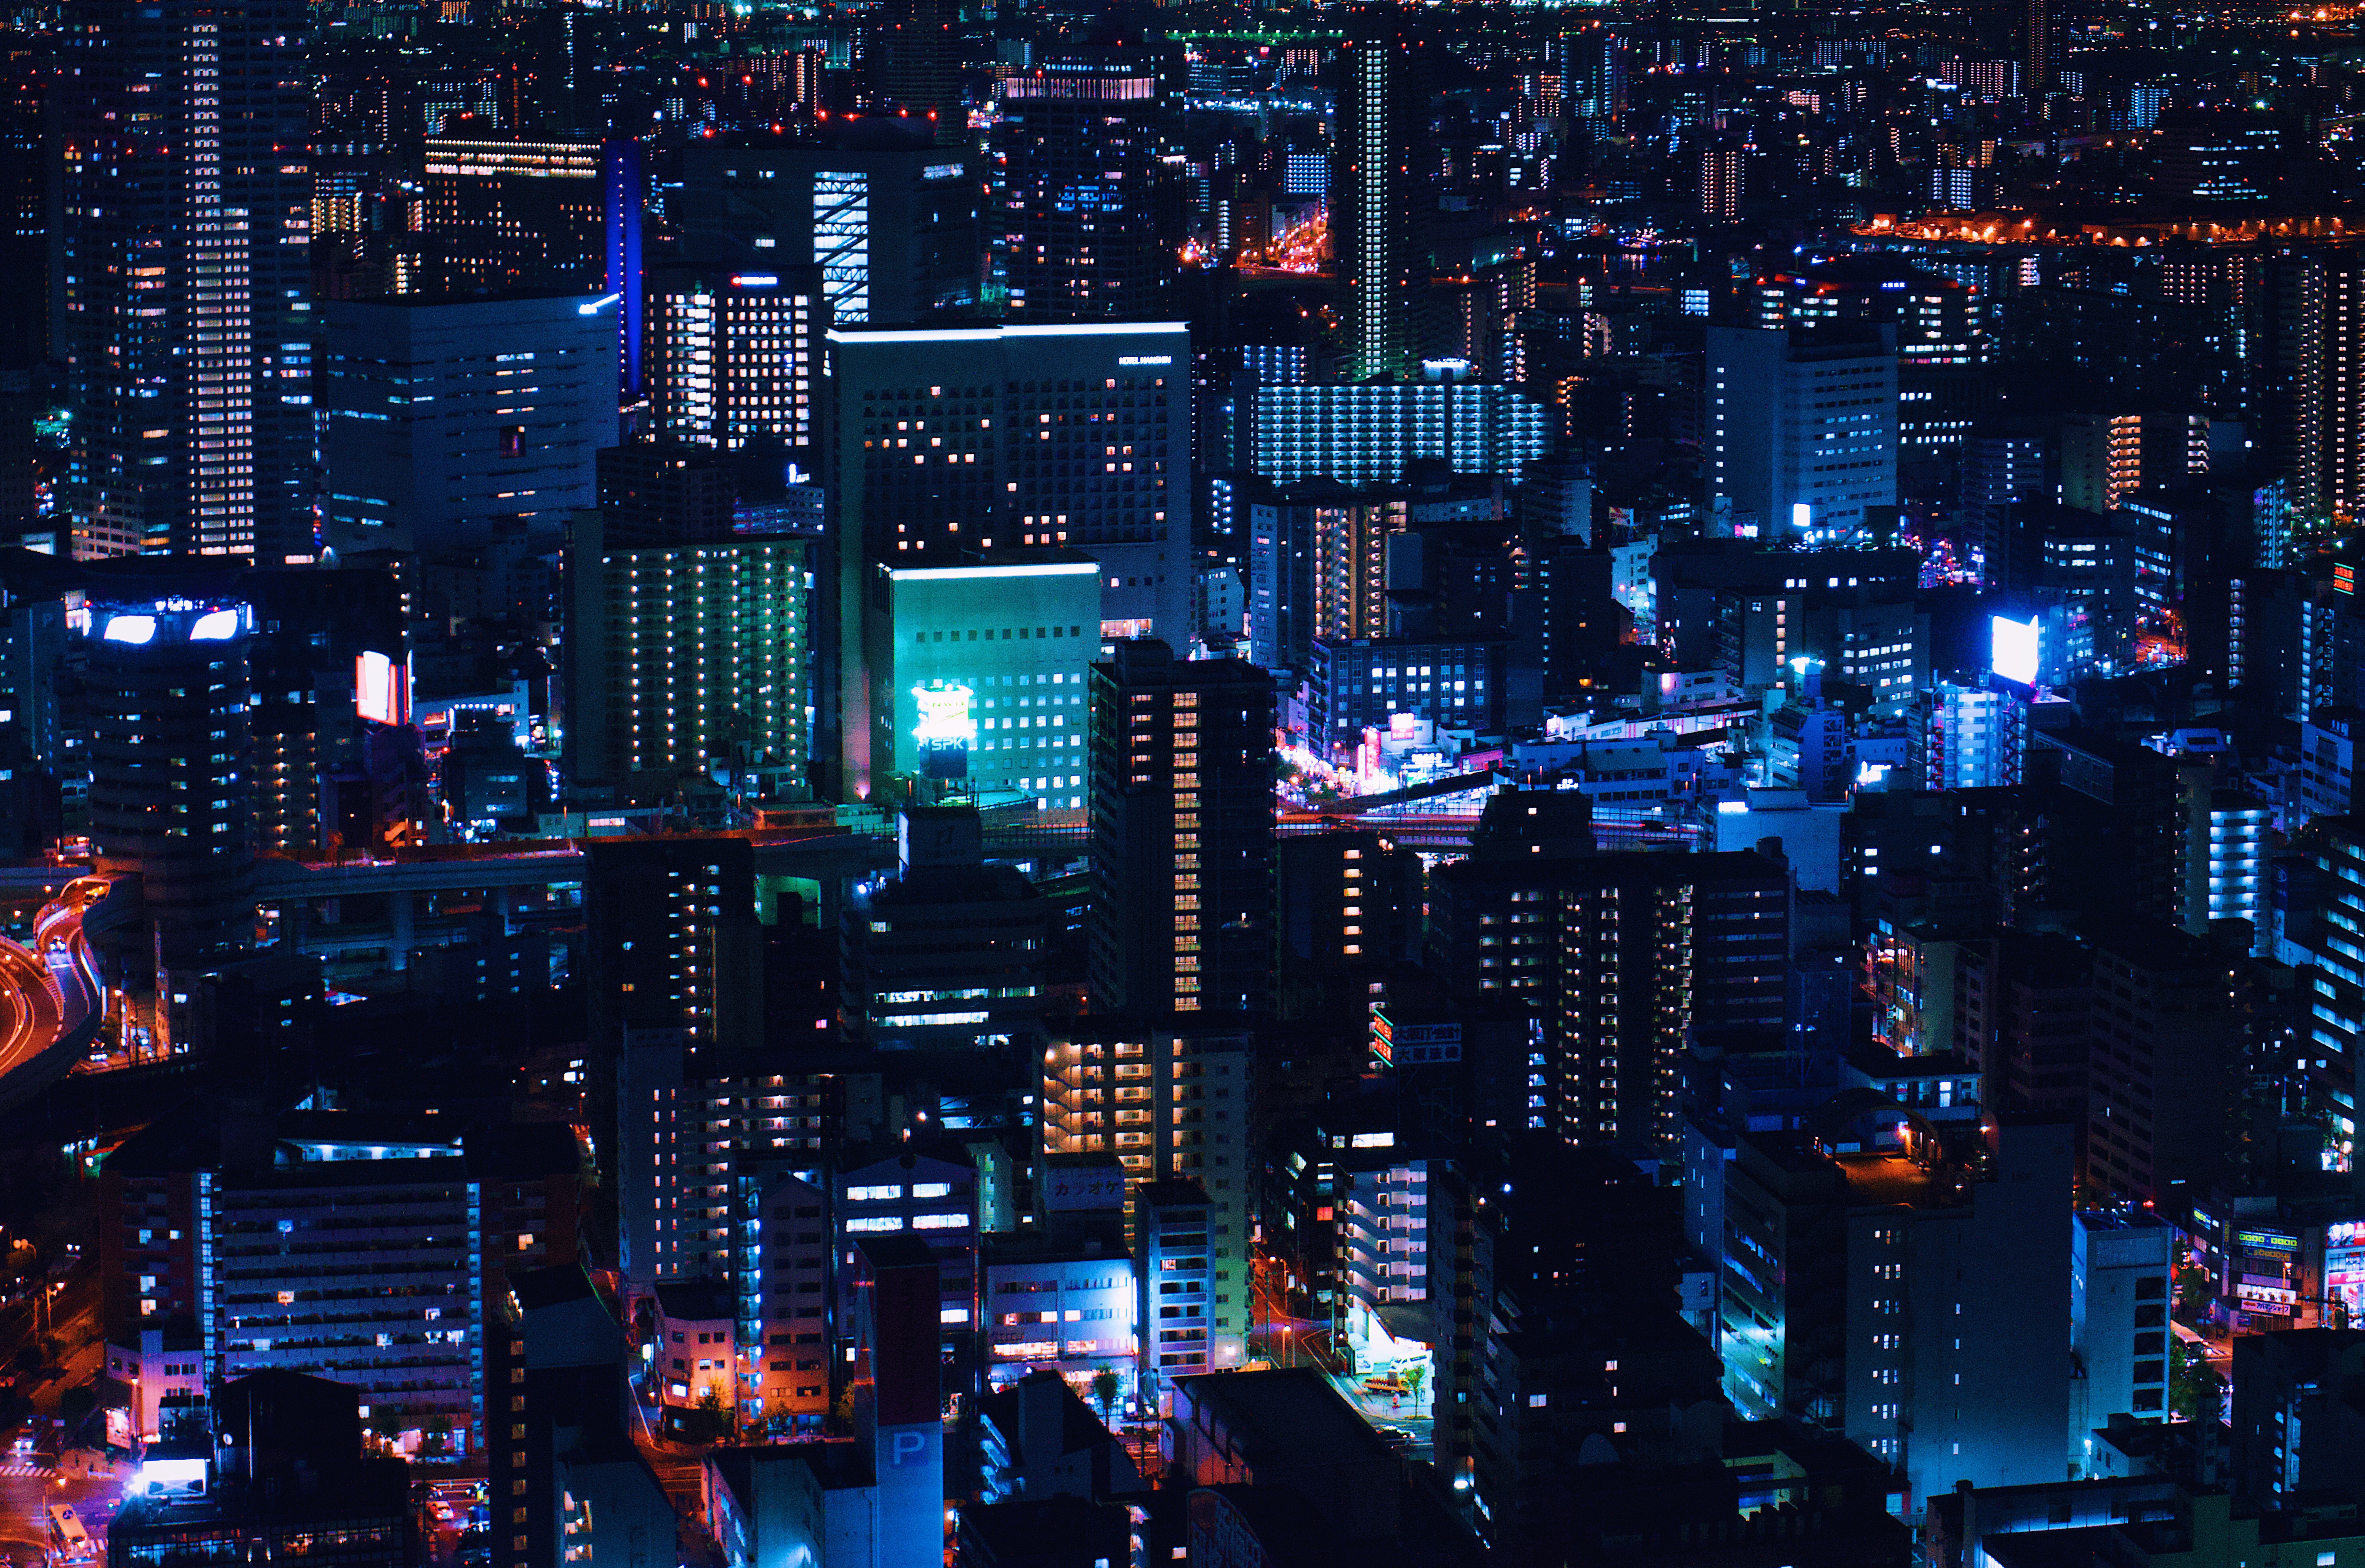 cities, night, view from above, night city, city lights, illumination, lighting